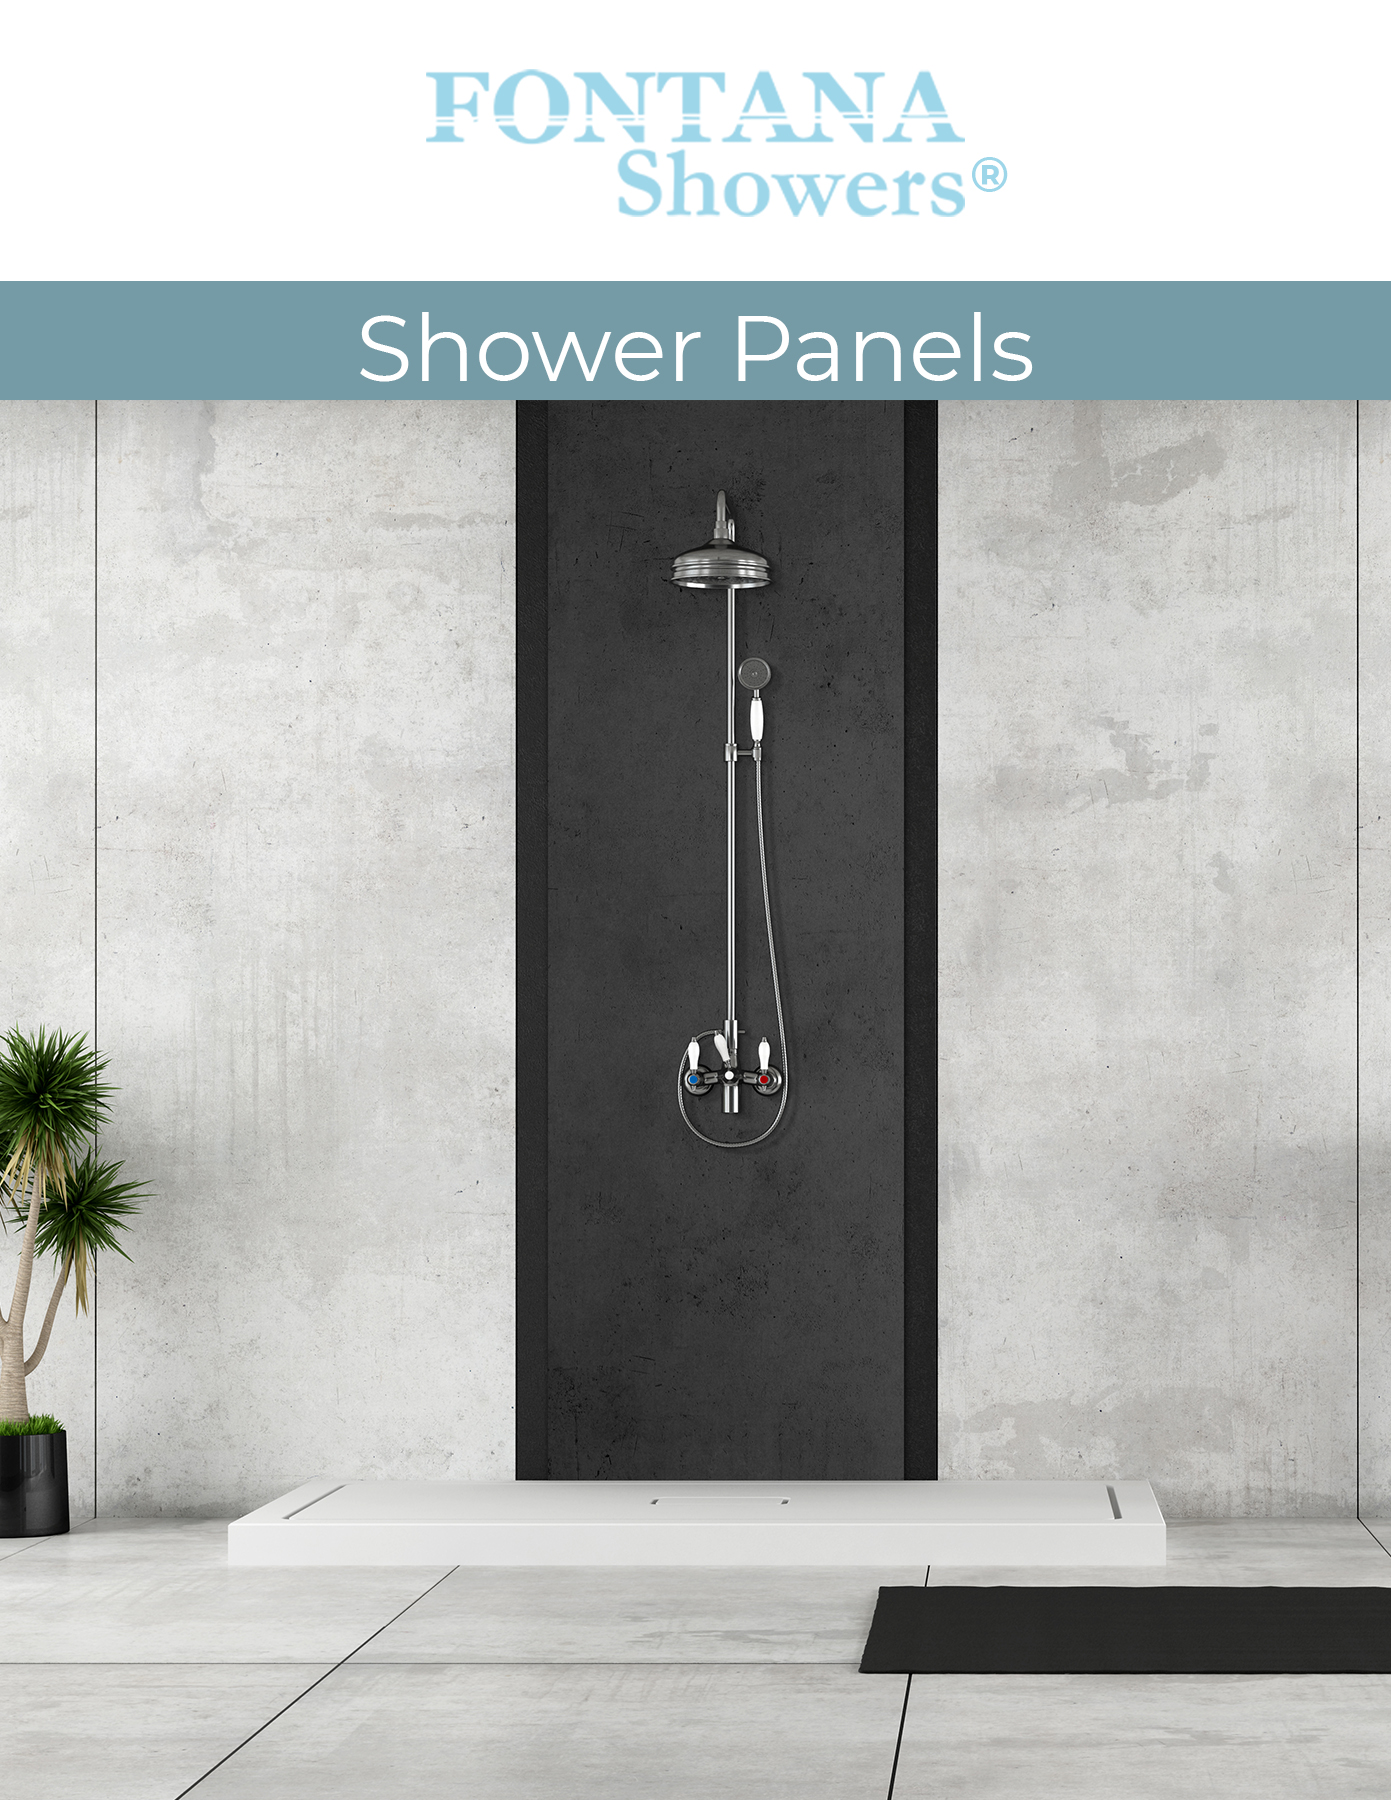 Fontana Showers commercial catalog Shower Panels